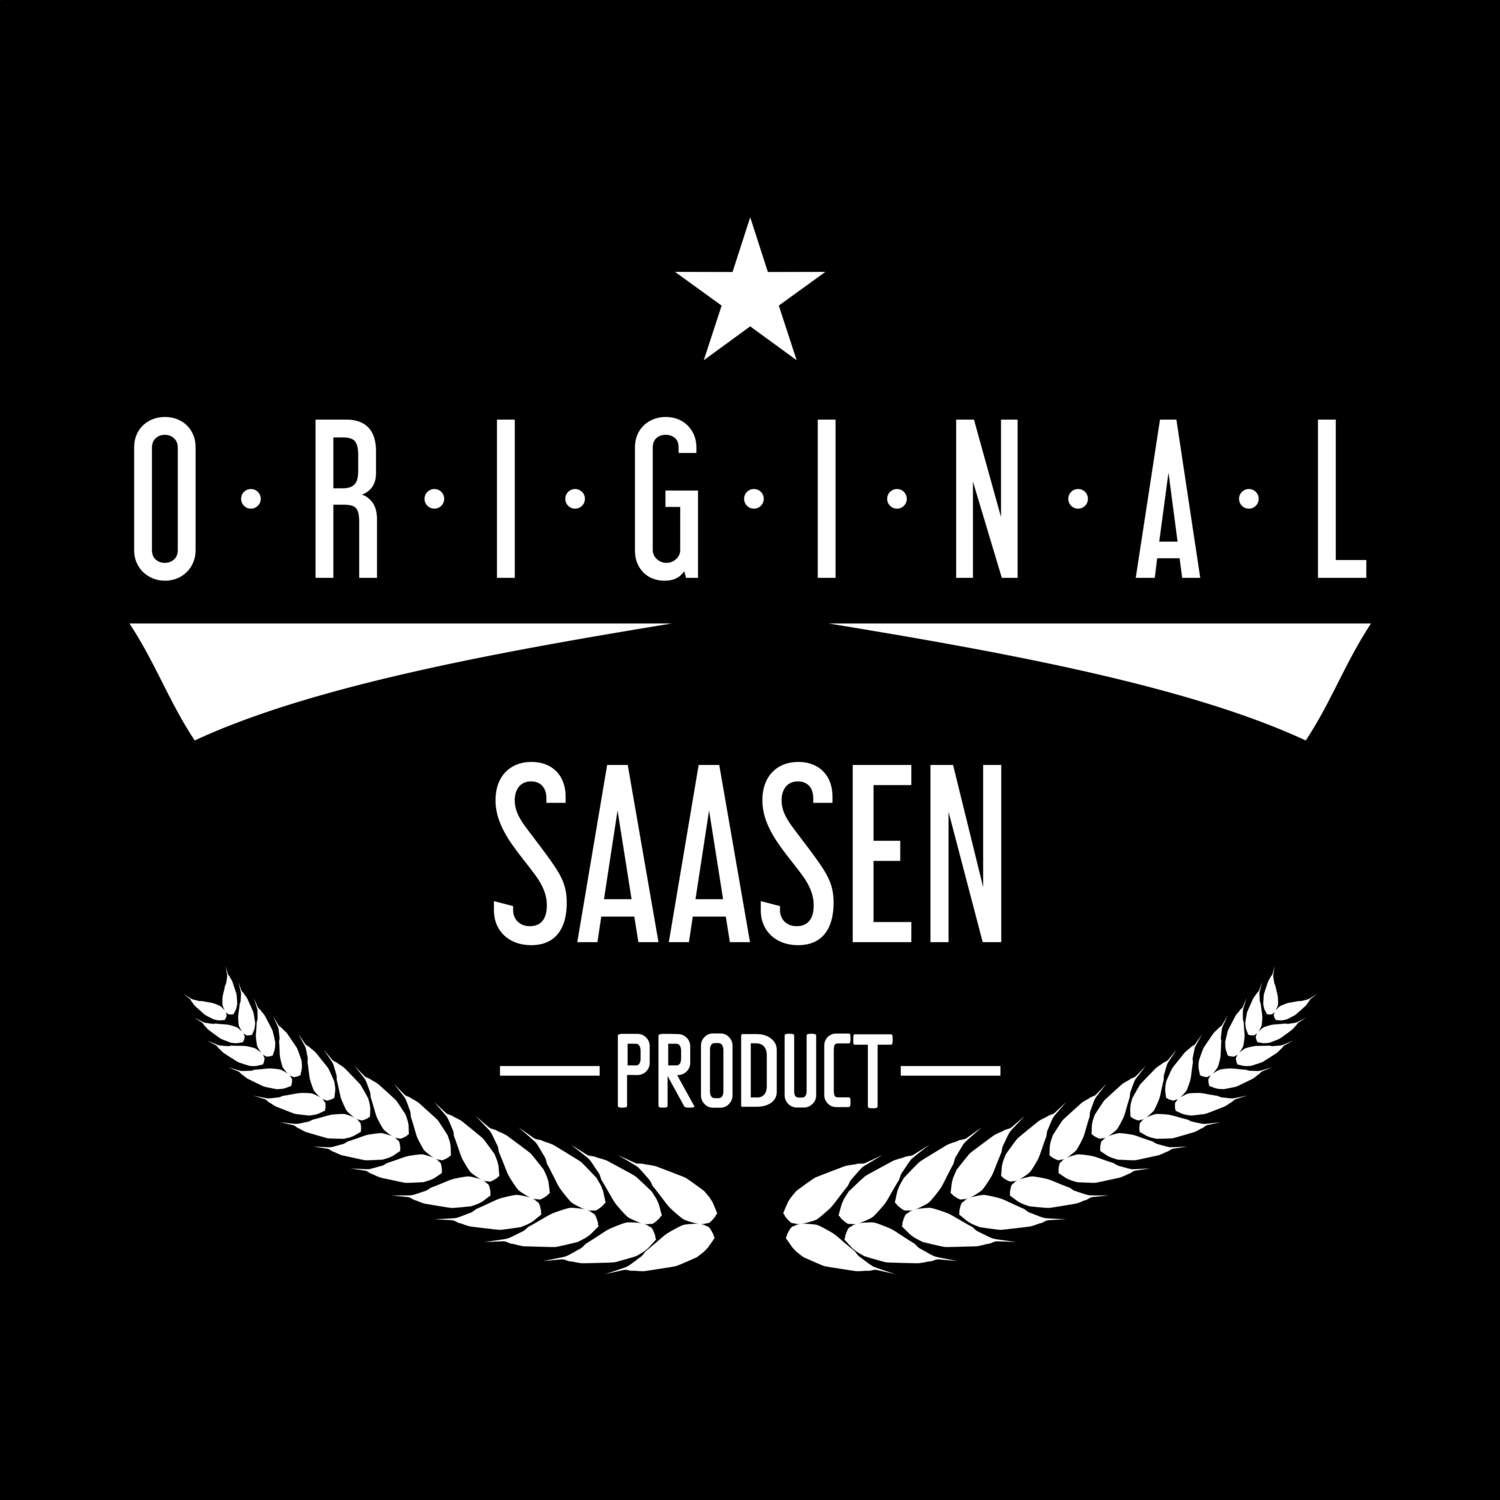 Saasen T-Shirt »Original Product«